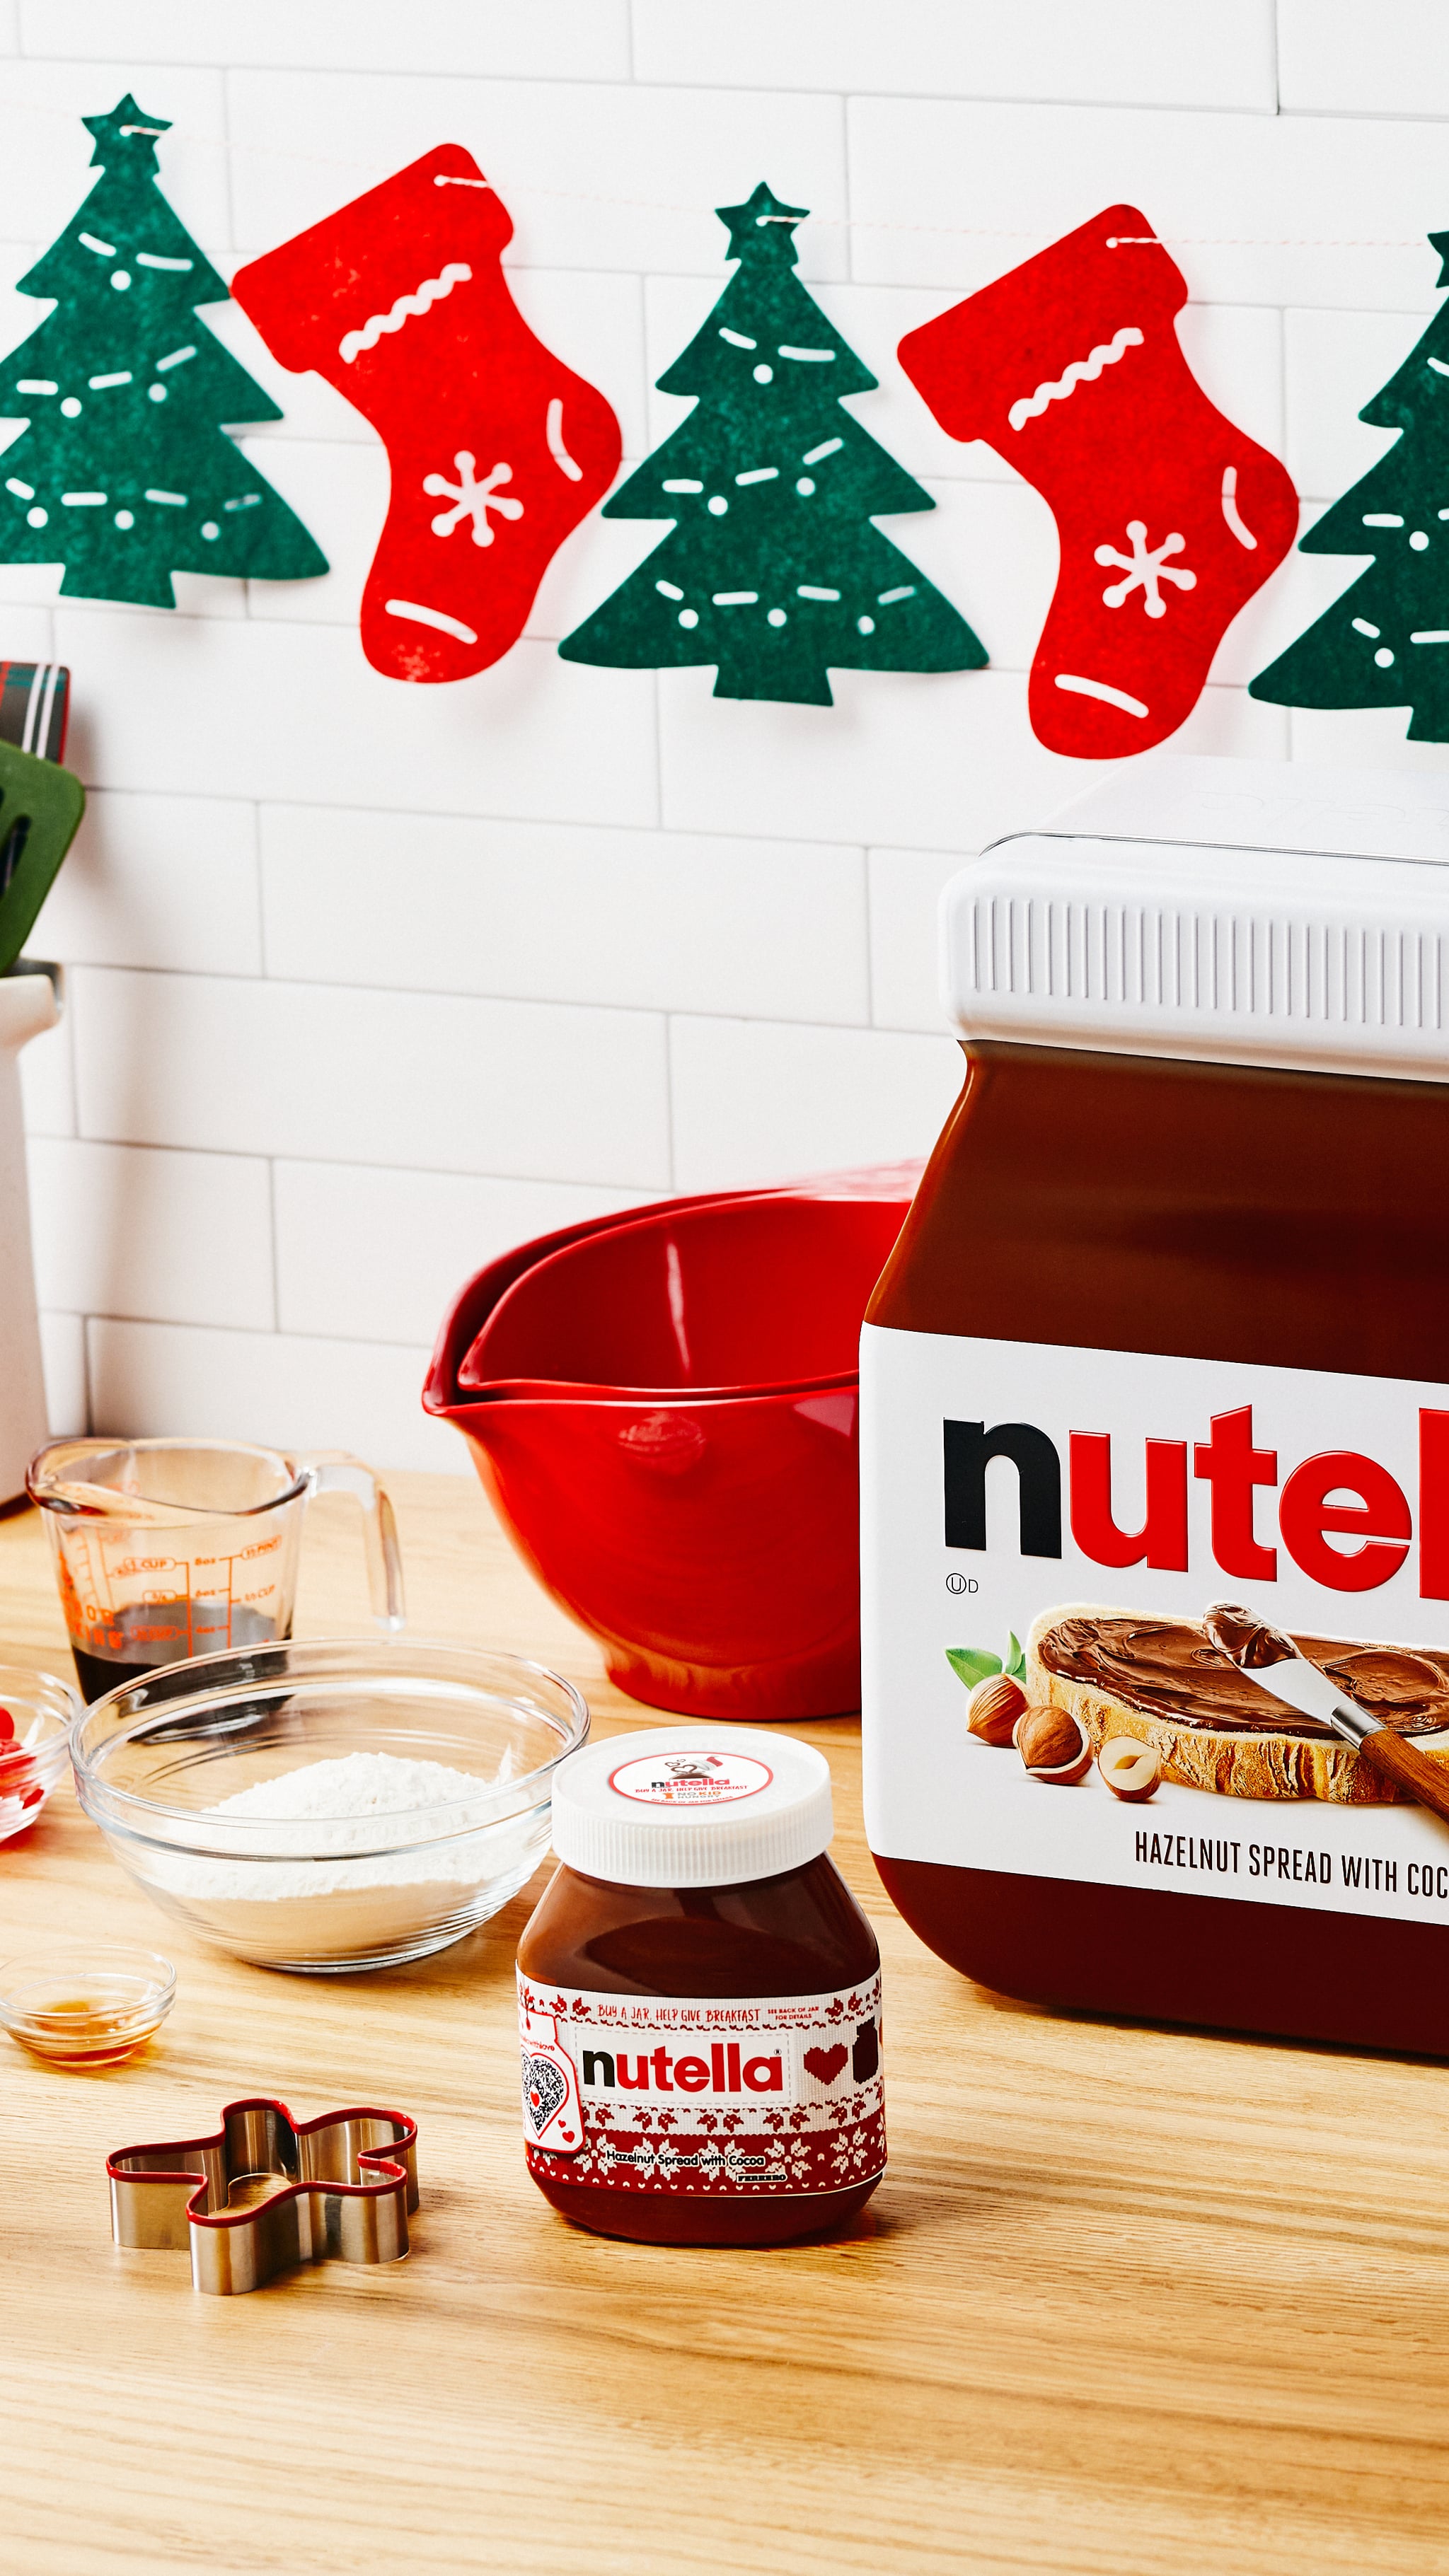 Nutella Diy Holiday Breakfast Kit Where To Buy The Nutella Diy Holiday Breakfast Kit Popsugar Food Uk Photo 4